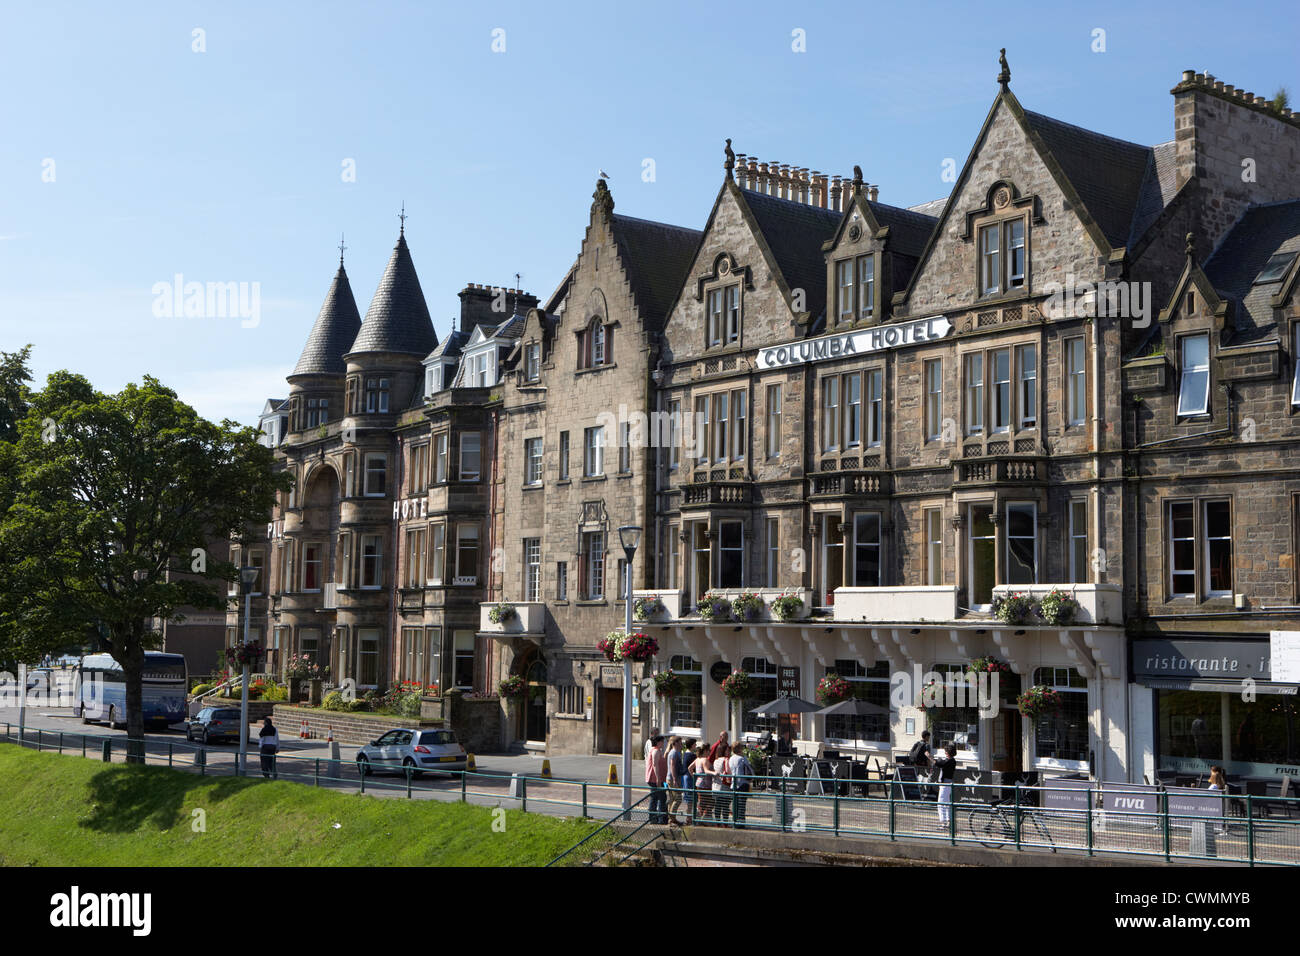 Ness Walk con columba e alberghi palace dal fiume Ness inverness city highland scozia uk Foto Stock